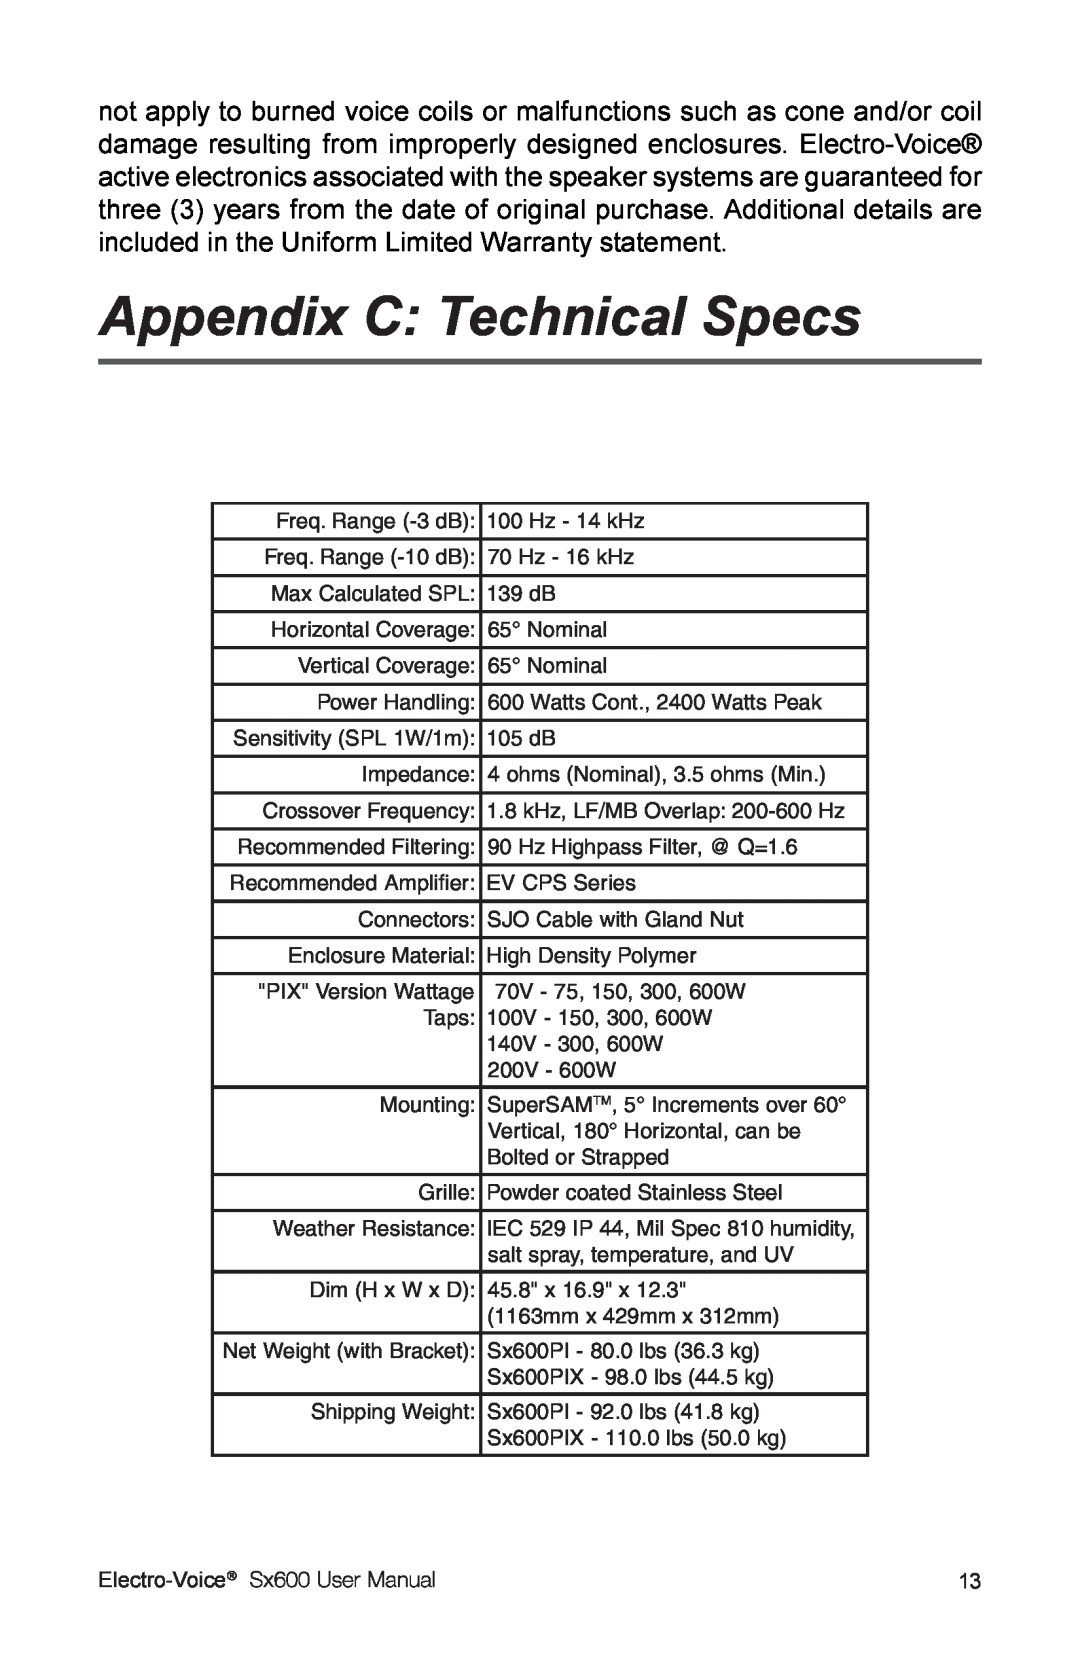 Electro-Voice Sx600 user manual Appendix C Technical Specs, Electro-Voice 